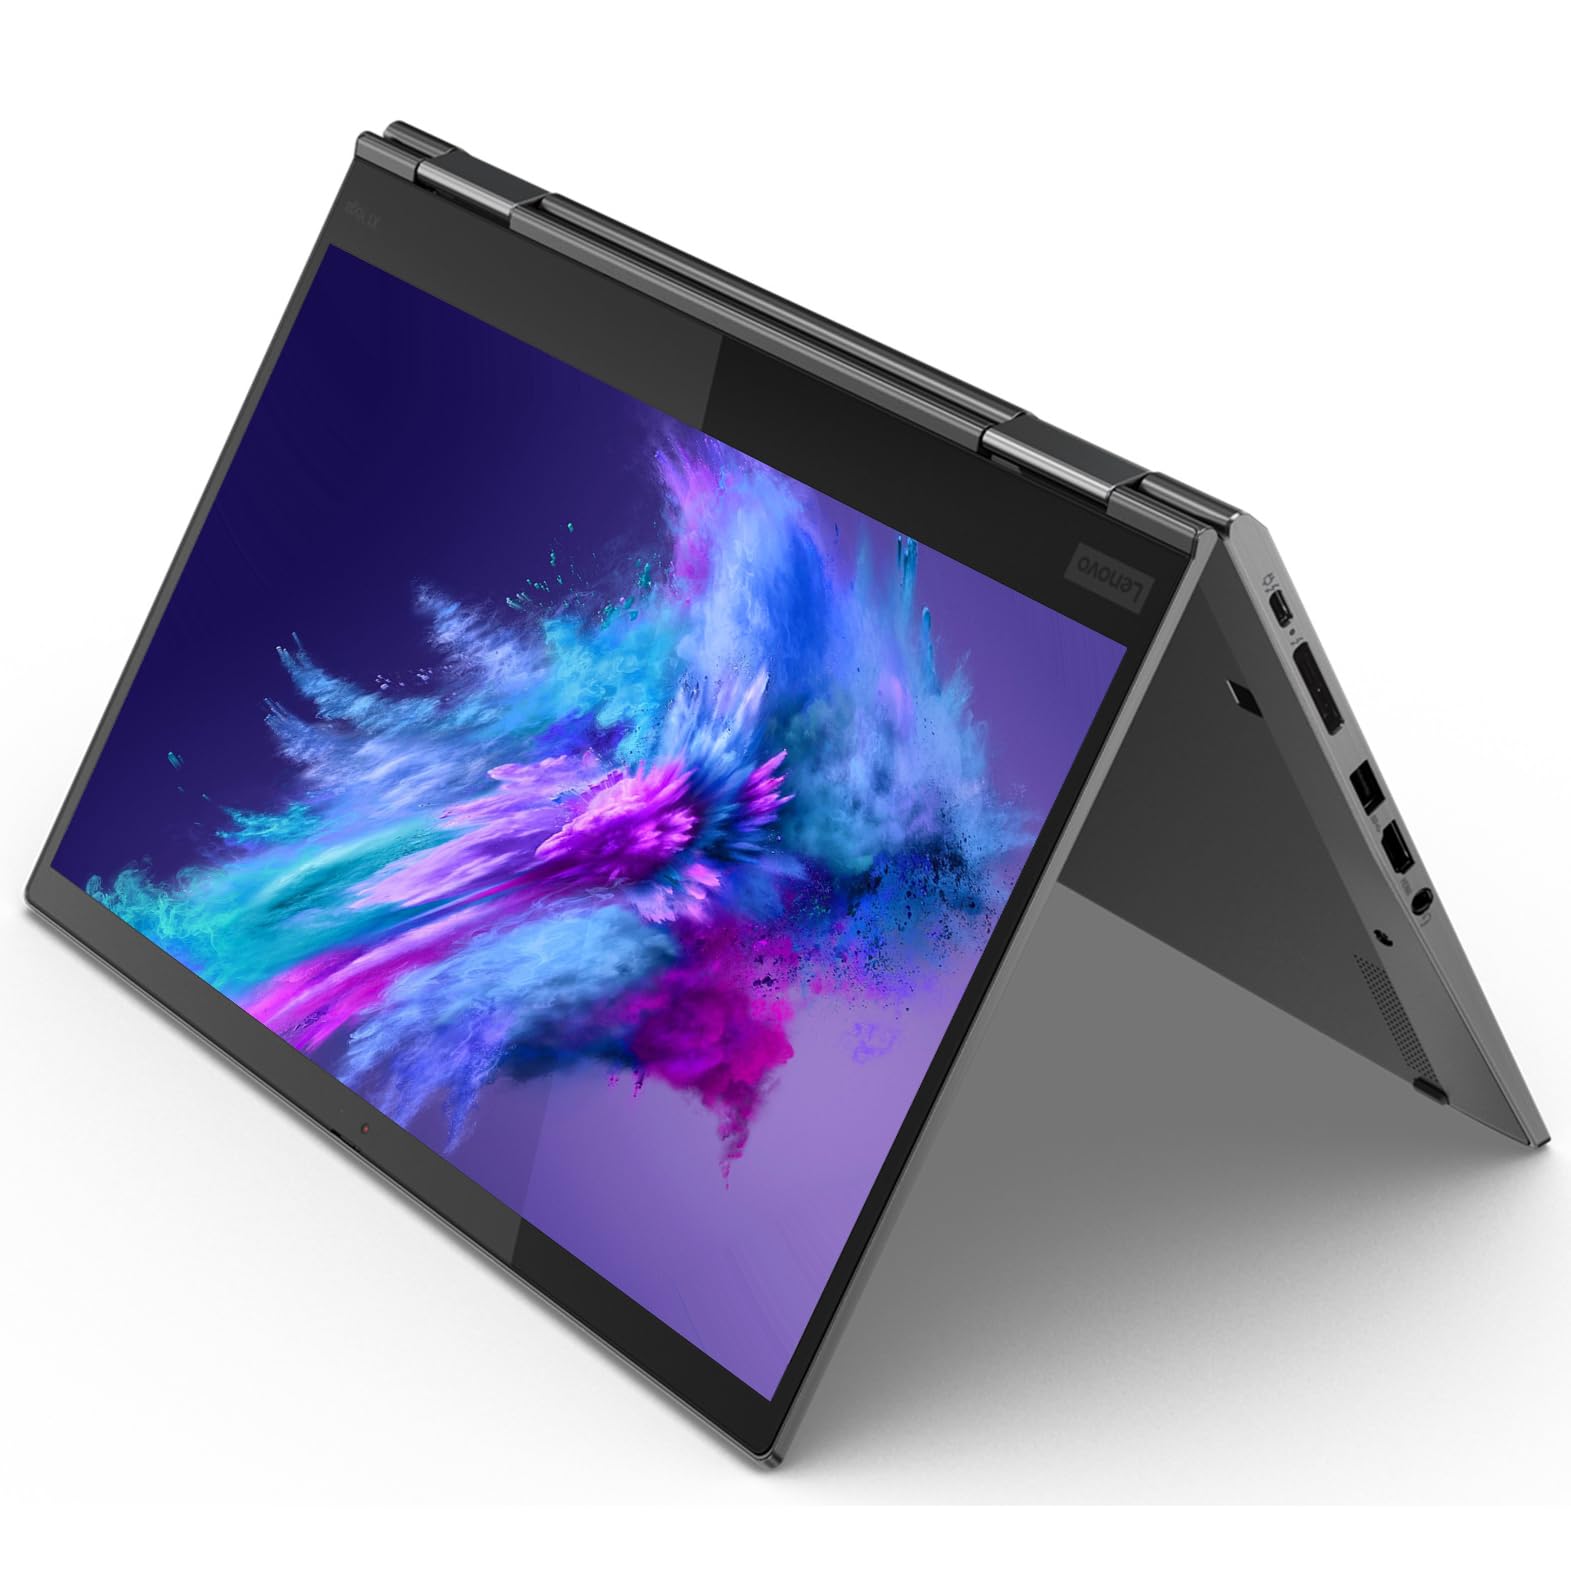 Lenovo ThinkPad X1 Yoga (Gen 4) i7-8665U 1.9Ghz 14" 2-in-1 Laptop, 16GB RAM, 2TB NVMe SSD,1080p, Thunderbolt 3, Windows 10 Pro (Renewed)